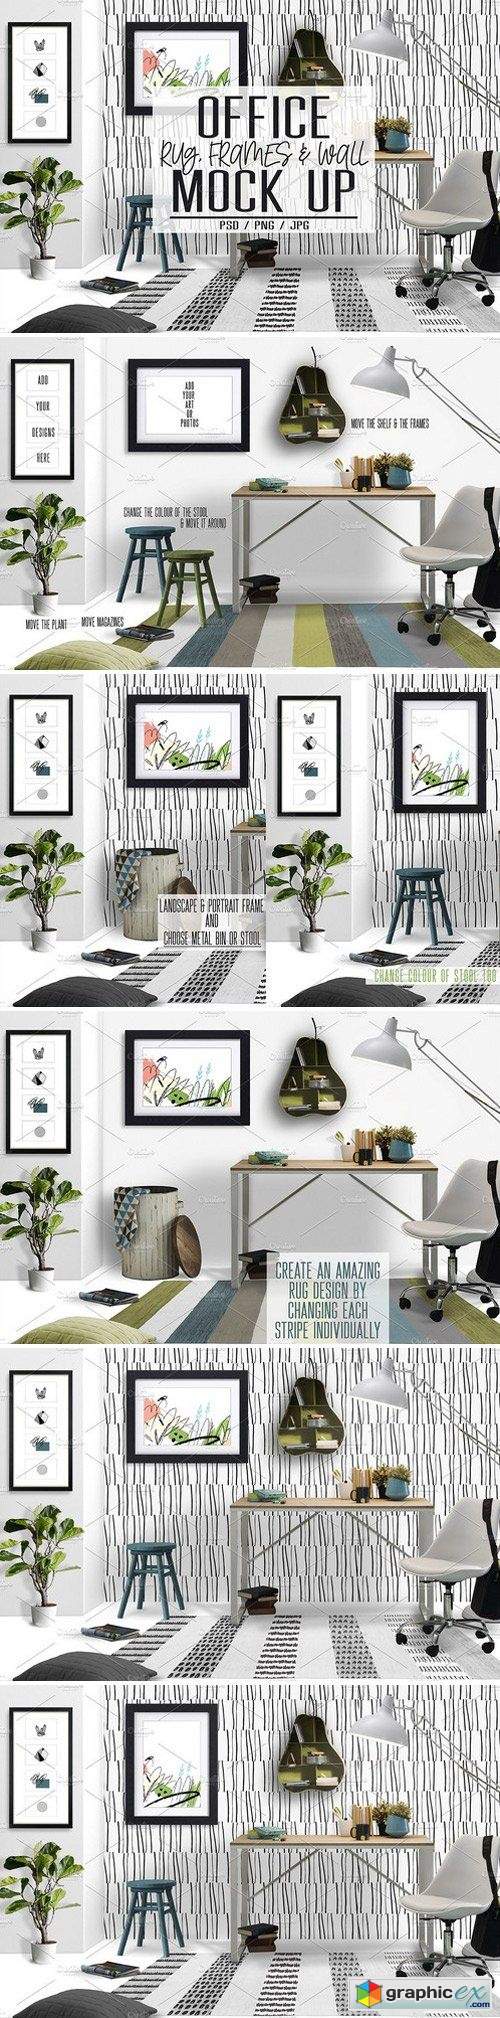 Office Rug, Wall & Frames Mock Up